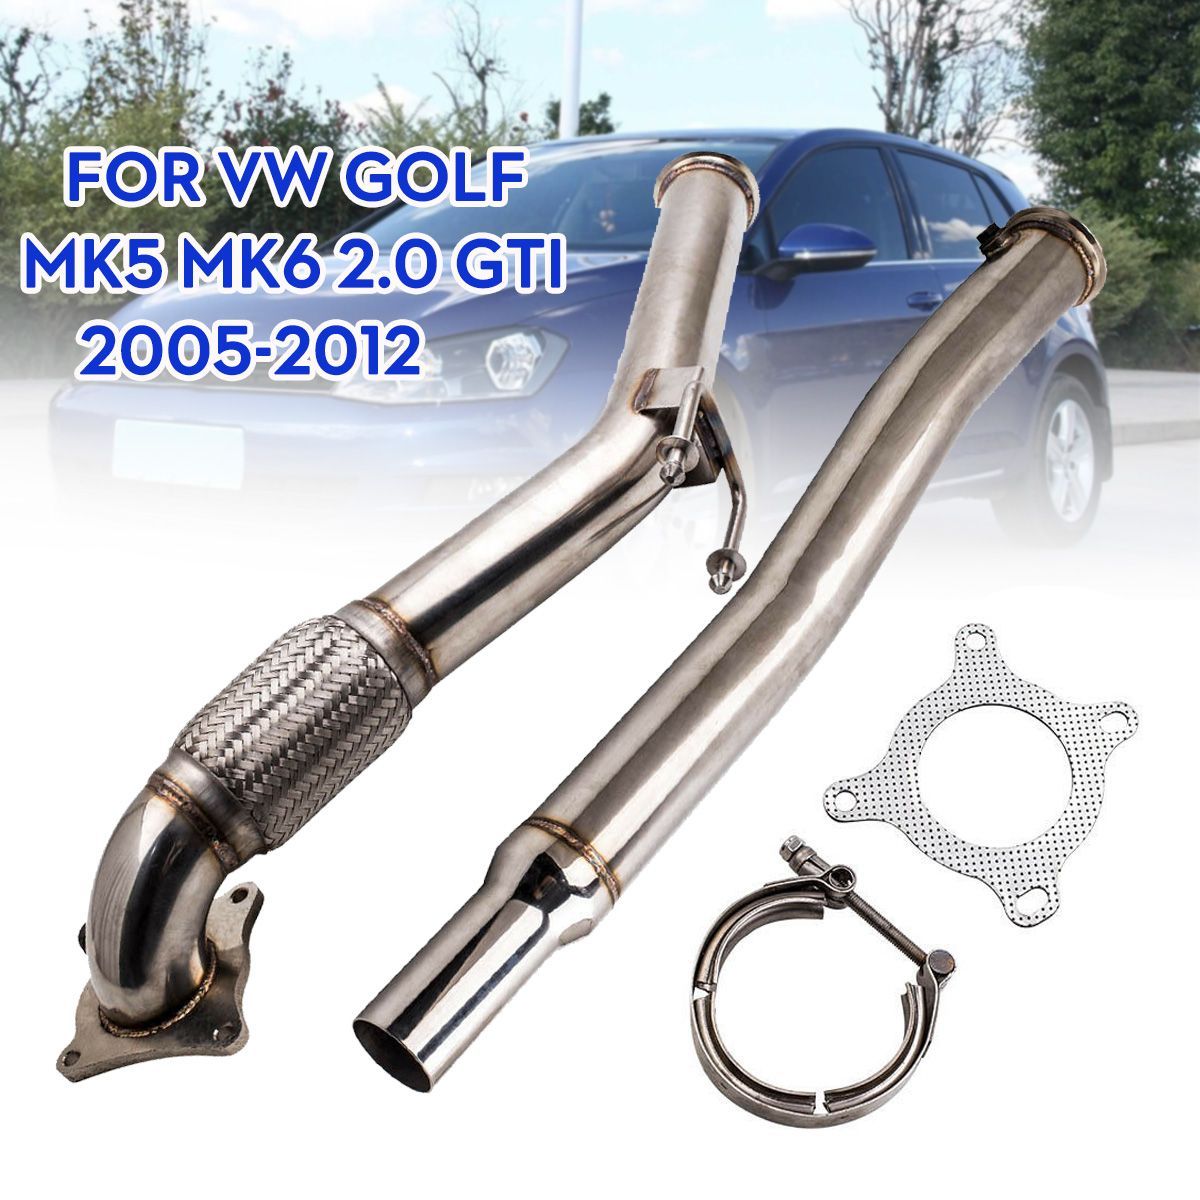 Stainless-Steel-Exhaust-Muffler-Decat-Downpipe-For-VW-Golf-MK5-MK6-20-GTI-2005-2012-1616780